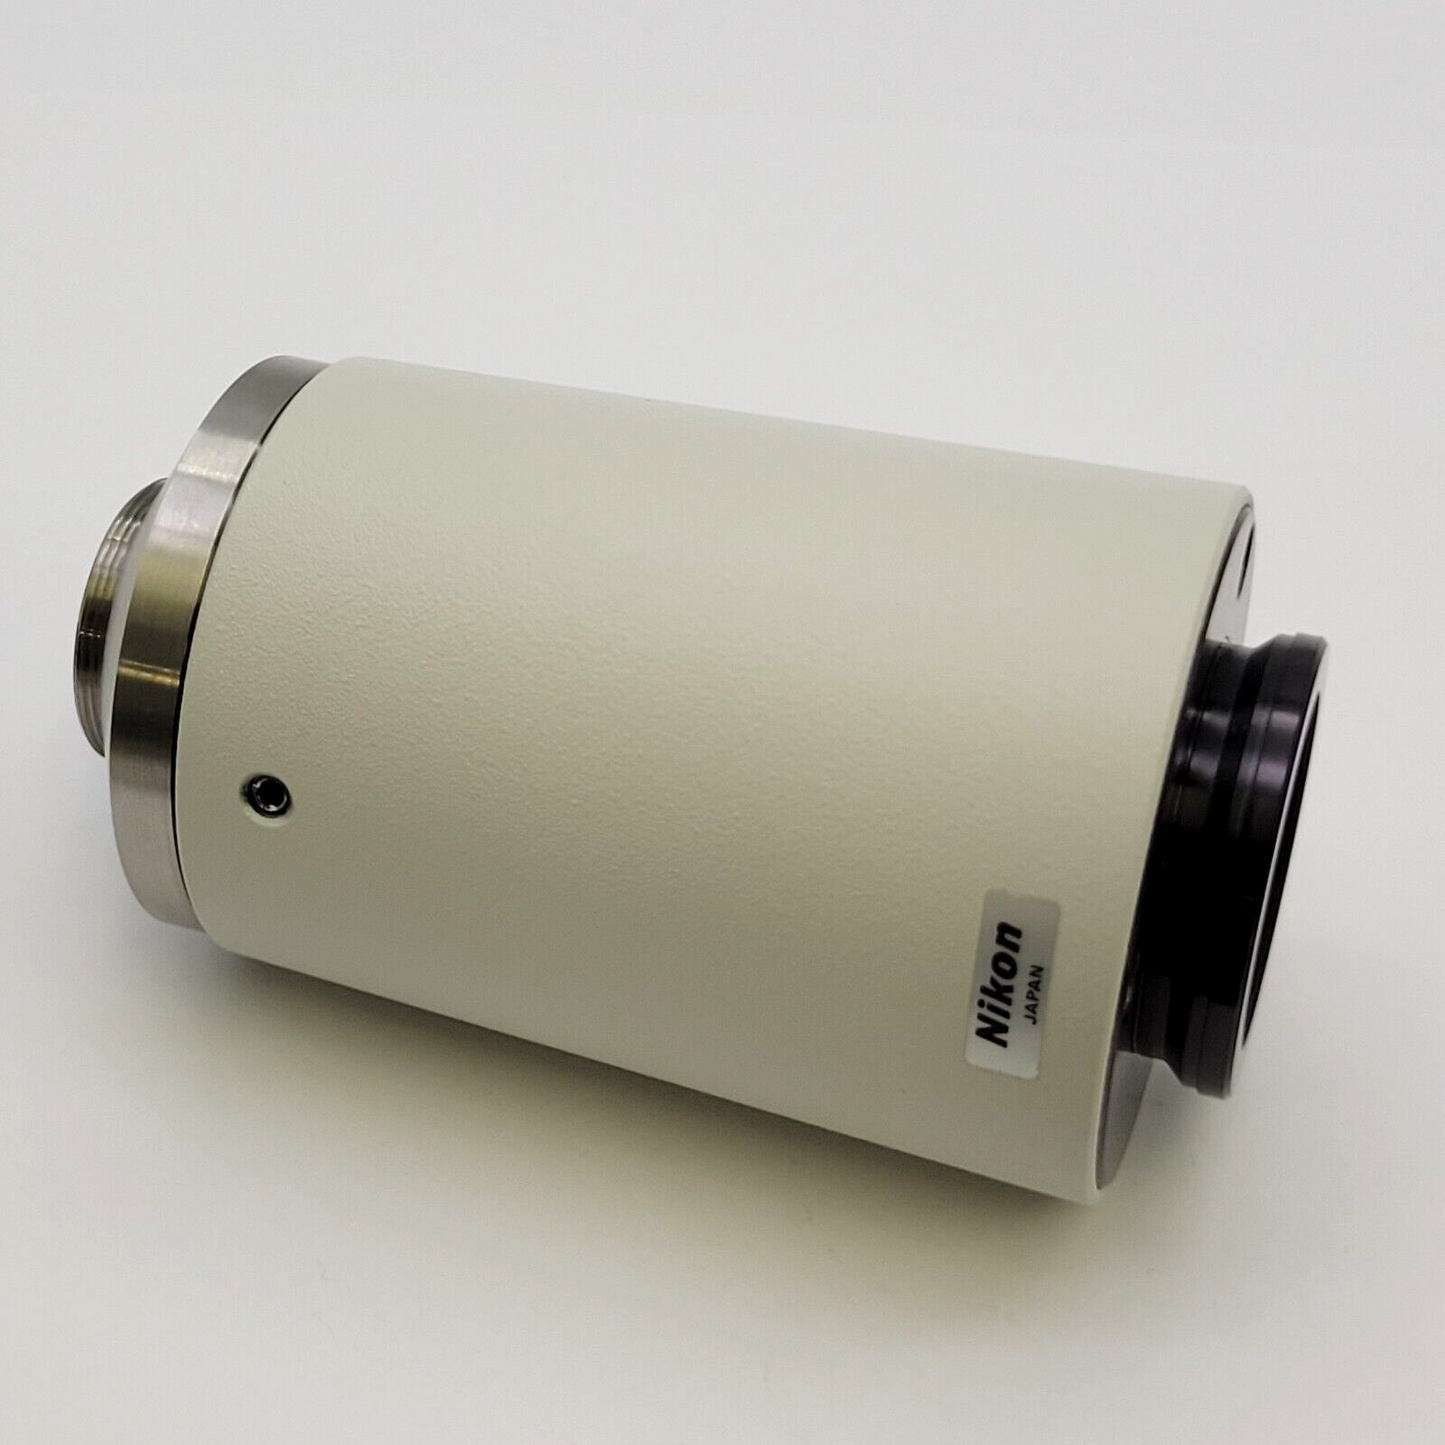 Diagnostic Instruments Microscope 1.0x Camera Adapter and Nikon Phototube - microscopemarketplace